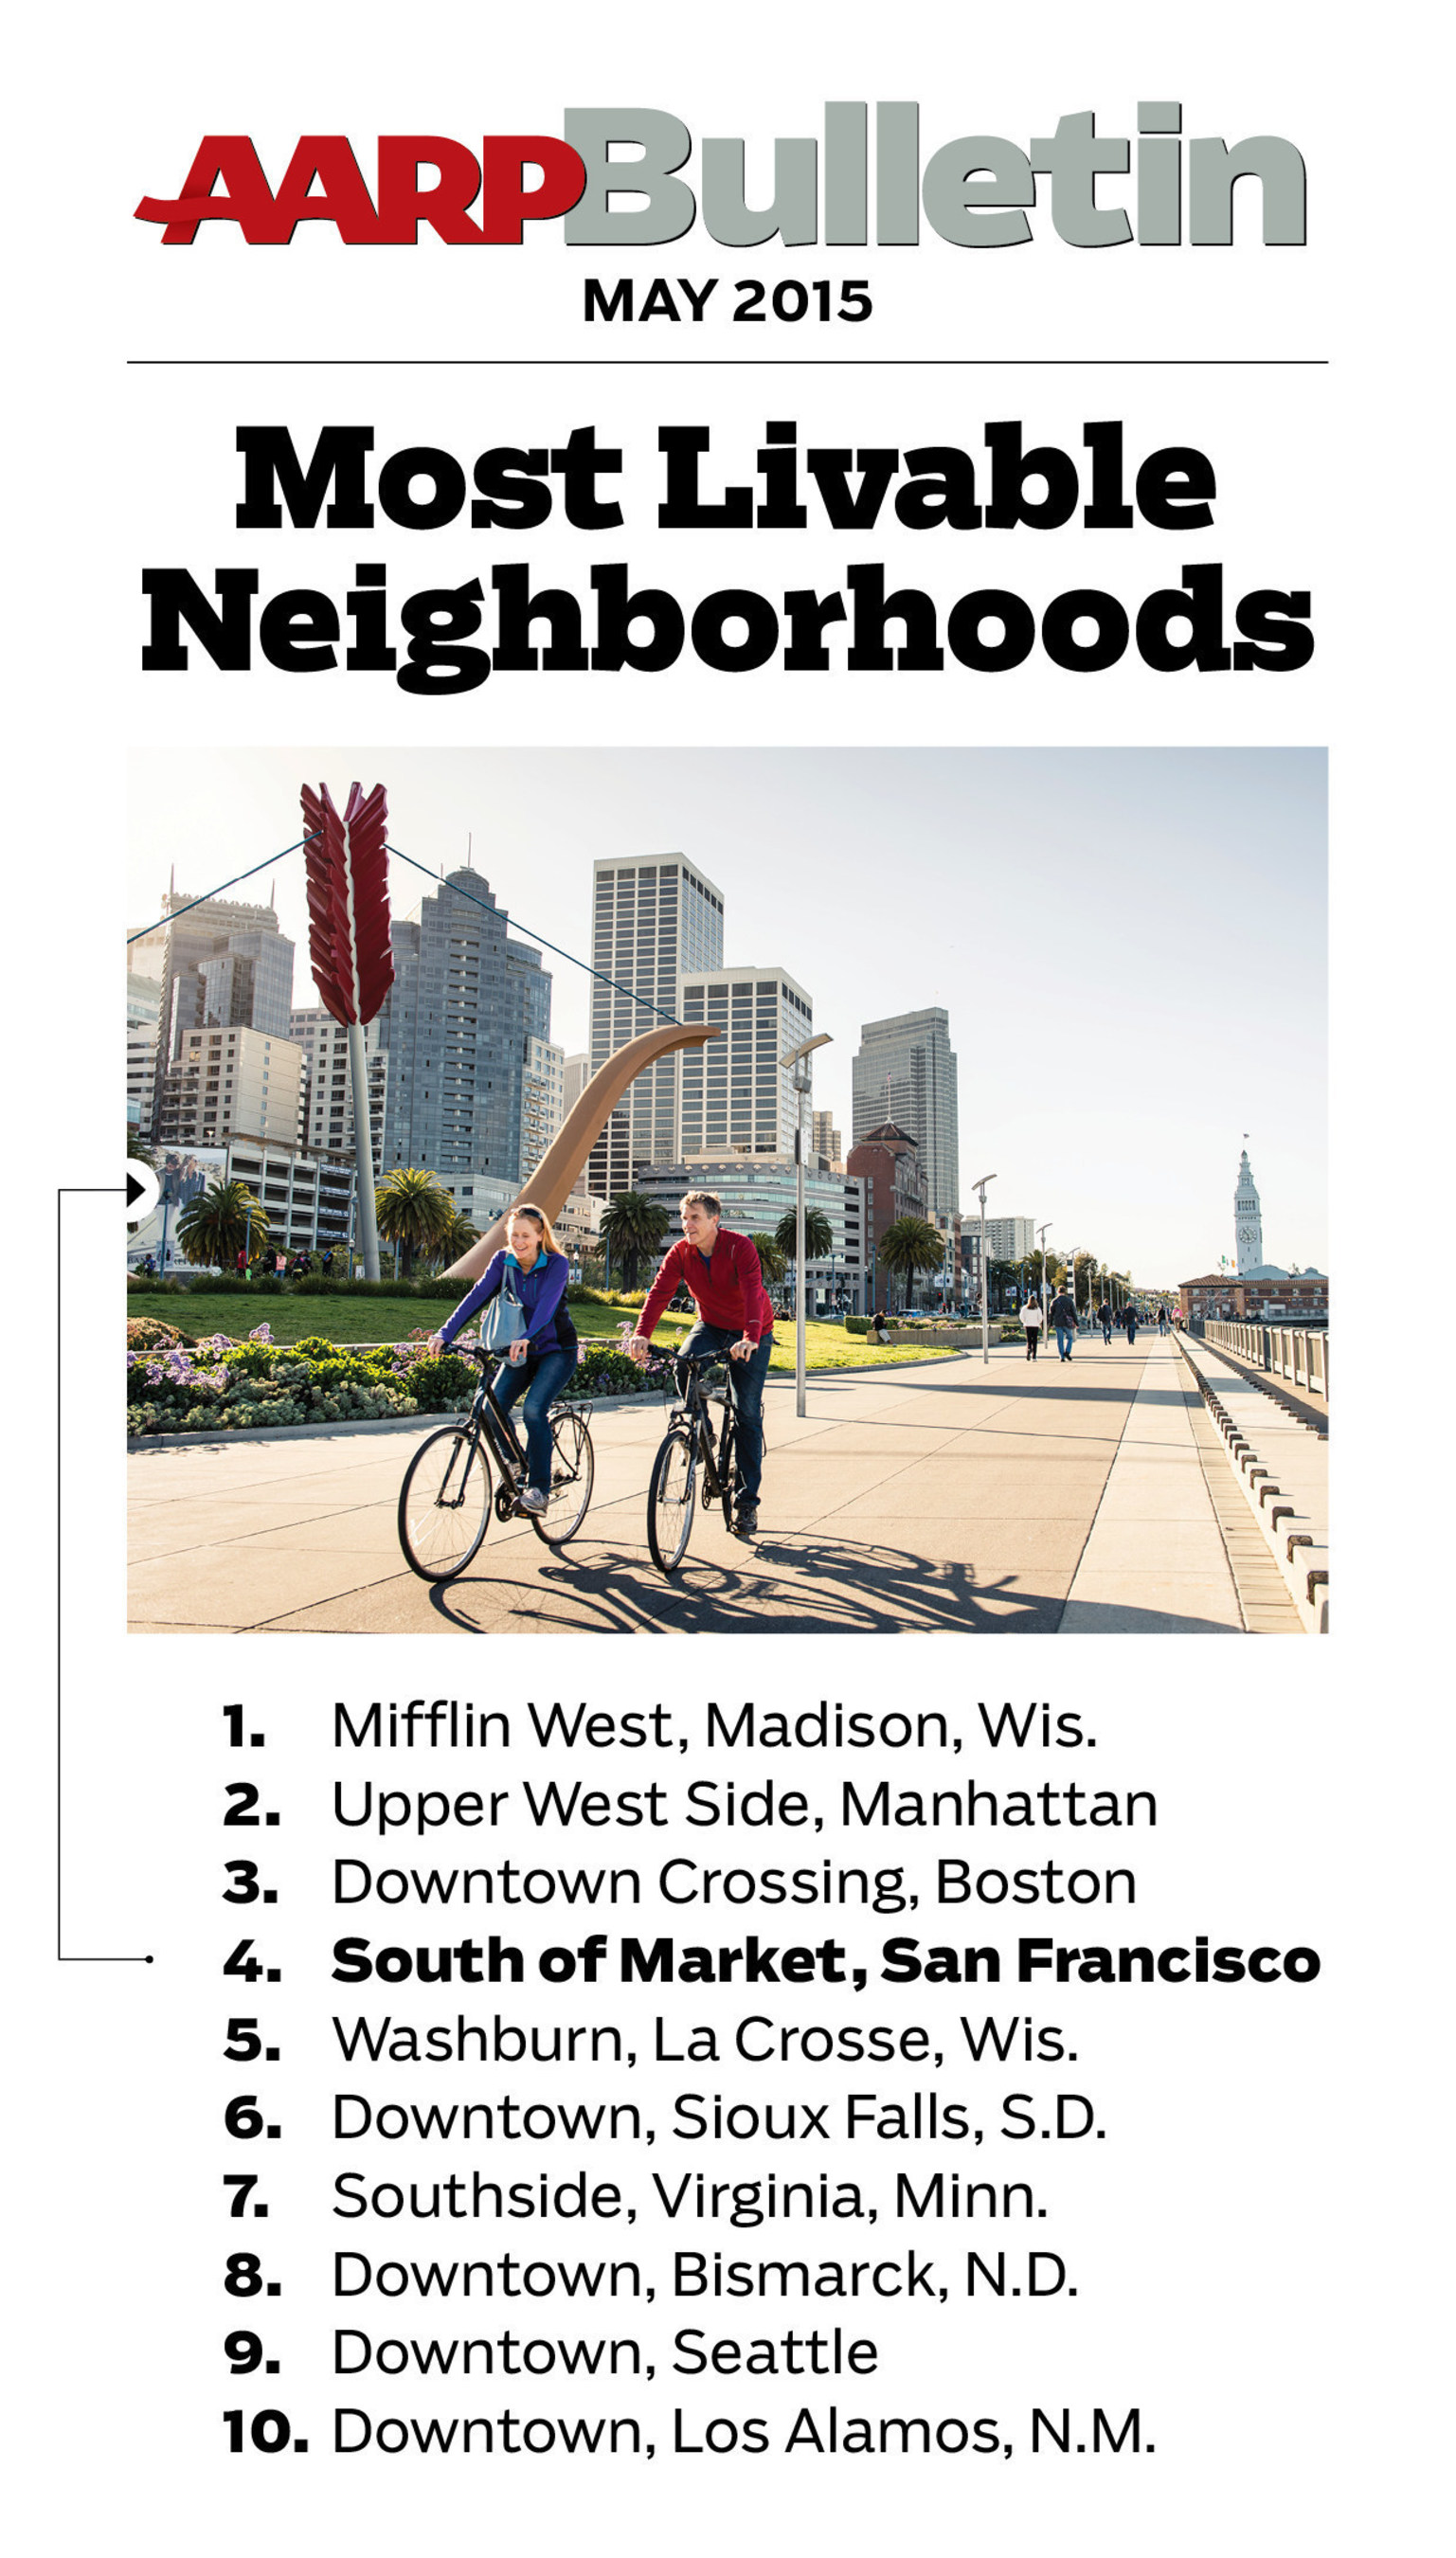 AARP Bulletin: Most Livable Neighborhoods